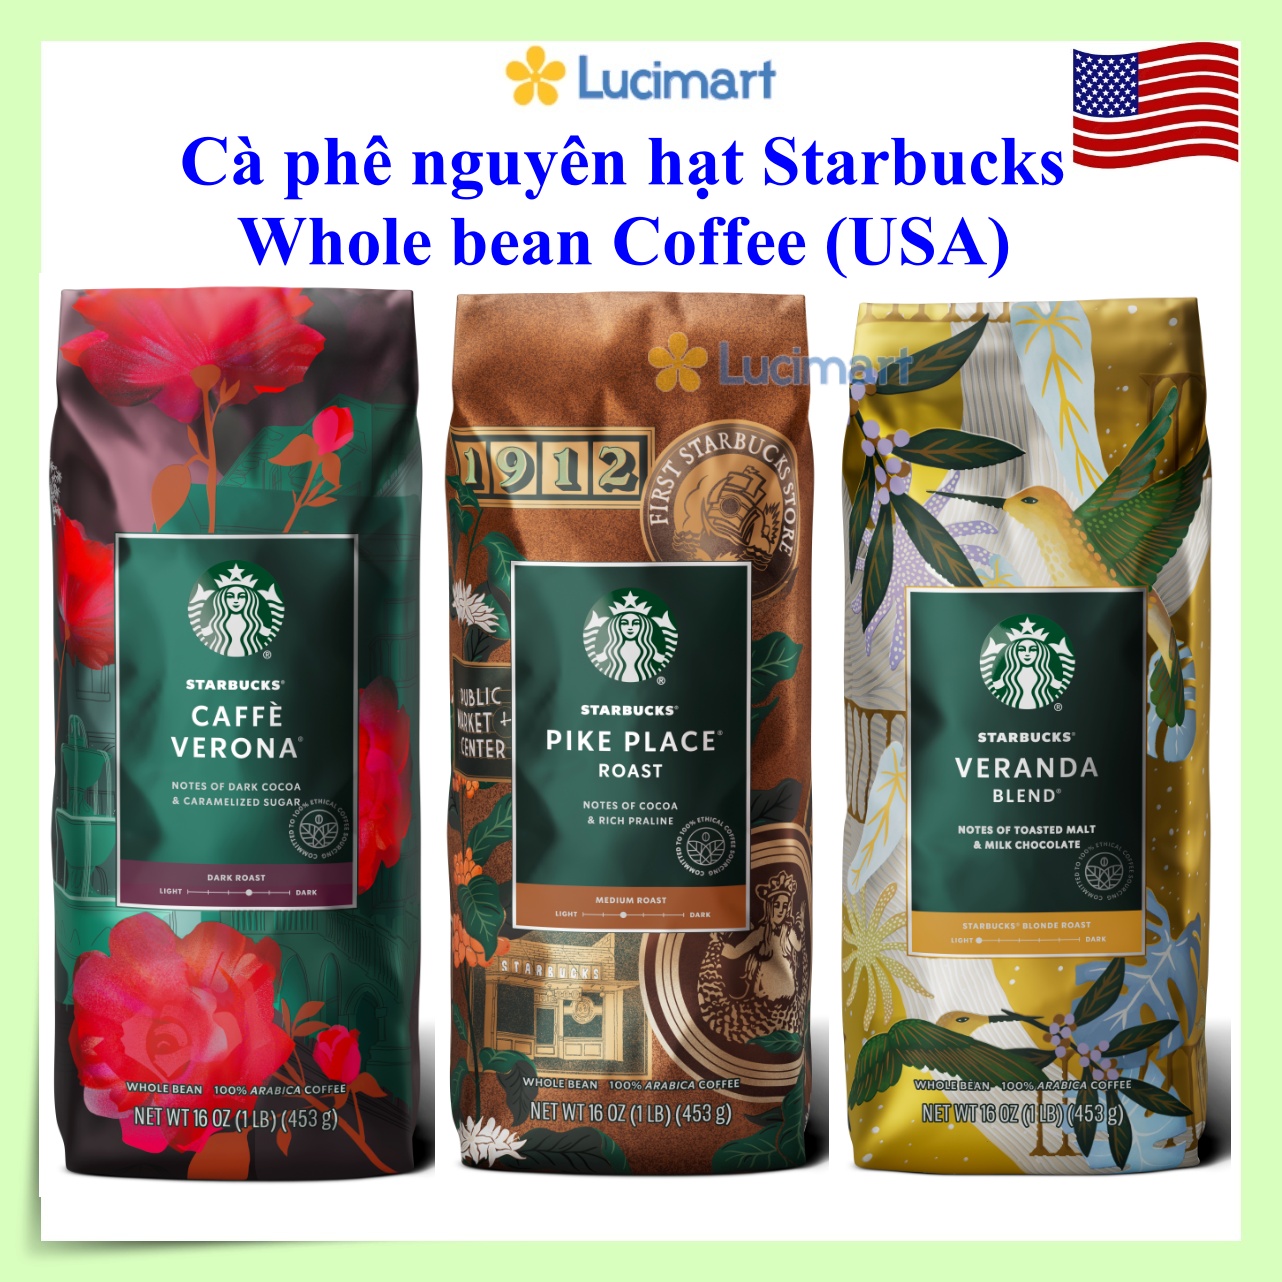 Cà phê Starbucks nguyên hạt 100% Arabica Coffee Whole Bean USA